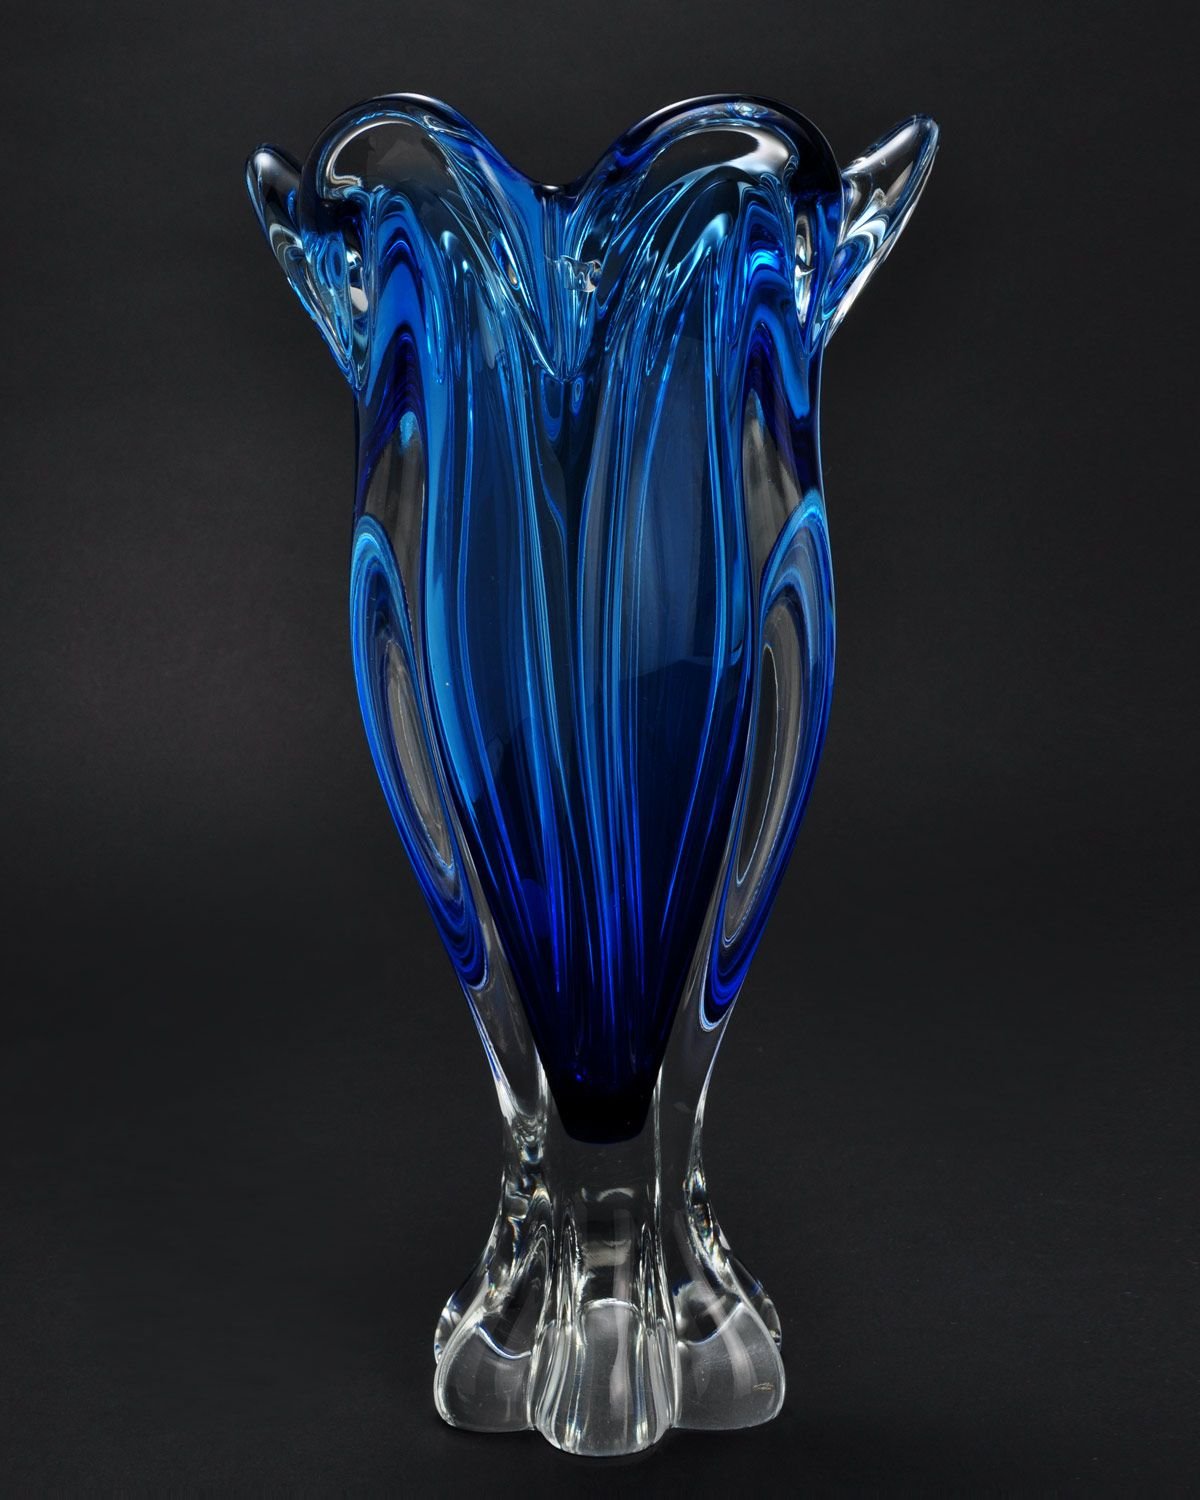 Ваза bohemia crystal. Ваза кобальт Богемия. Ваза Blue Glass Vase. Ваза гутное стекло Богемия. Ваза Богемия кобальтовое стекло.